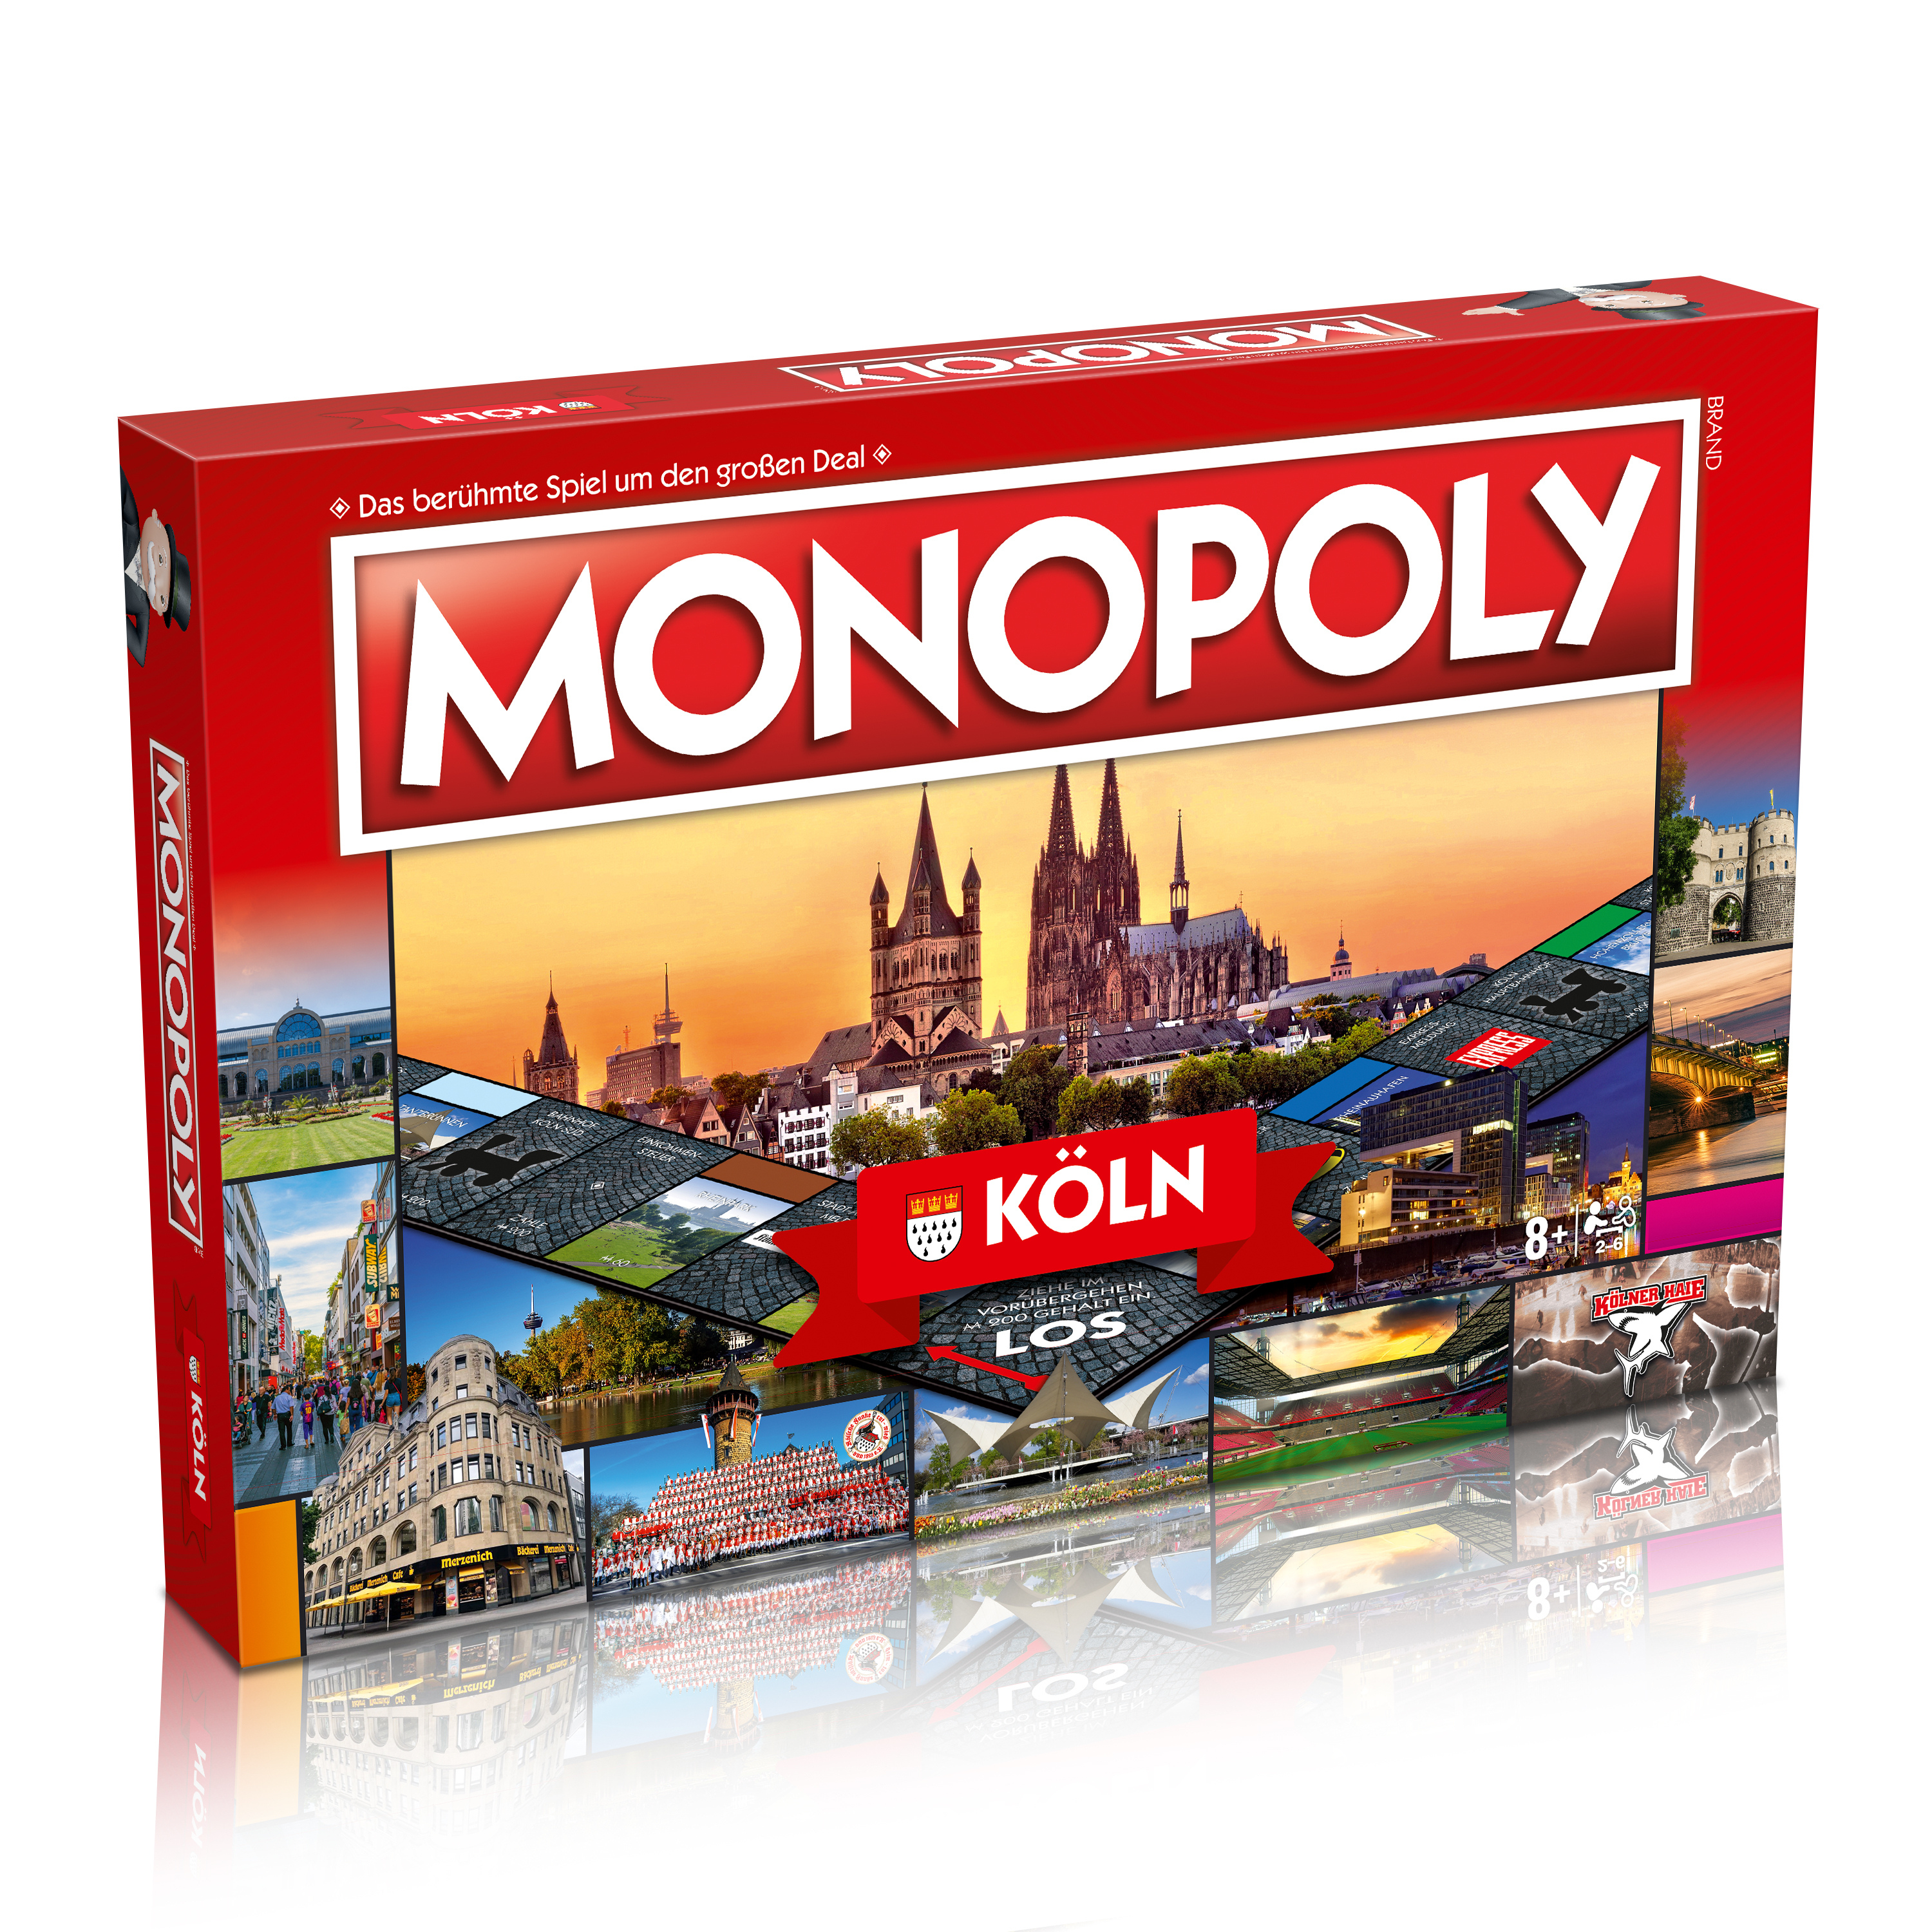 Monopoly Köln  + Scrabble Dialekt-Edition: Kölsch